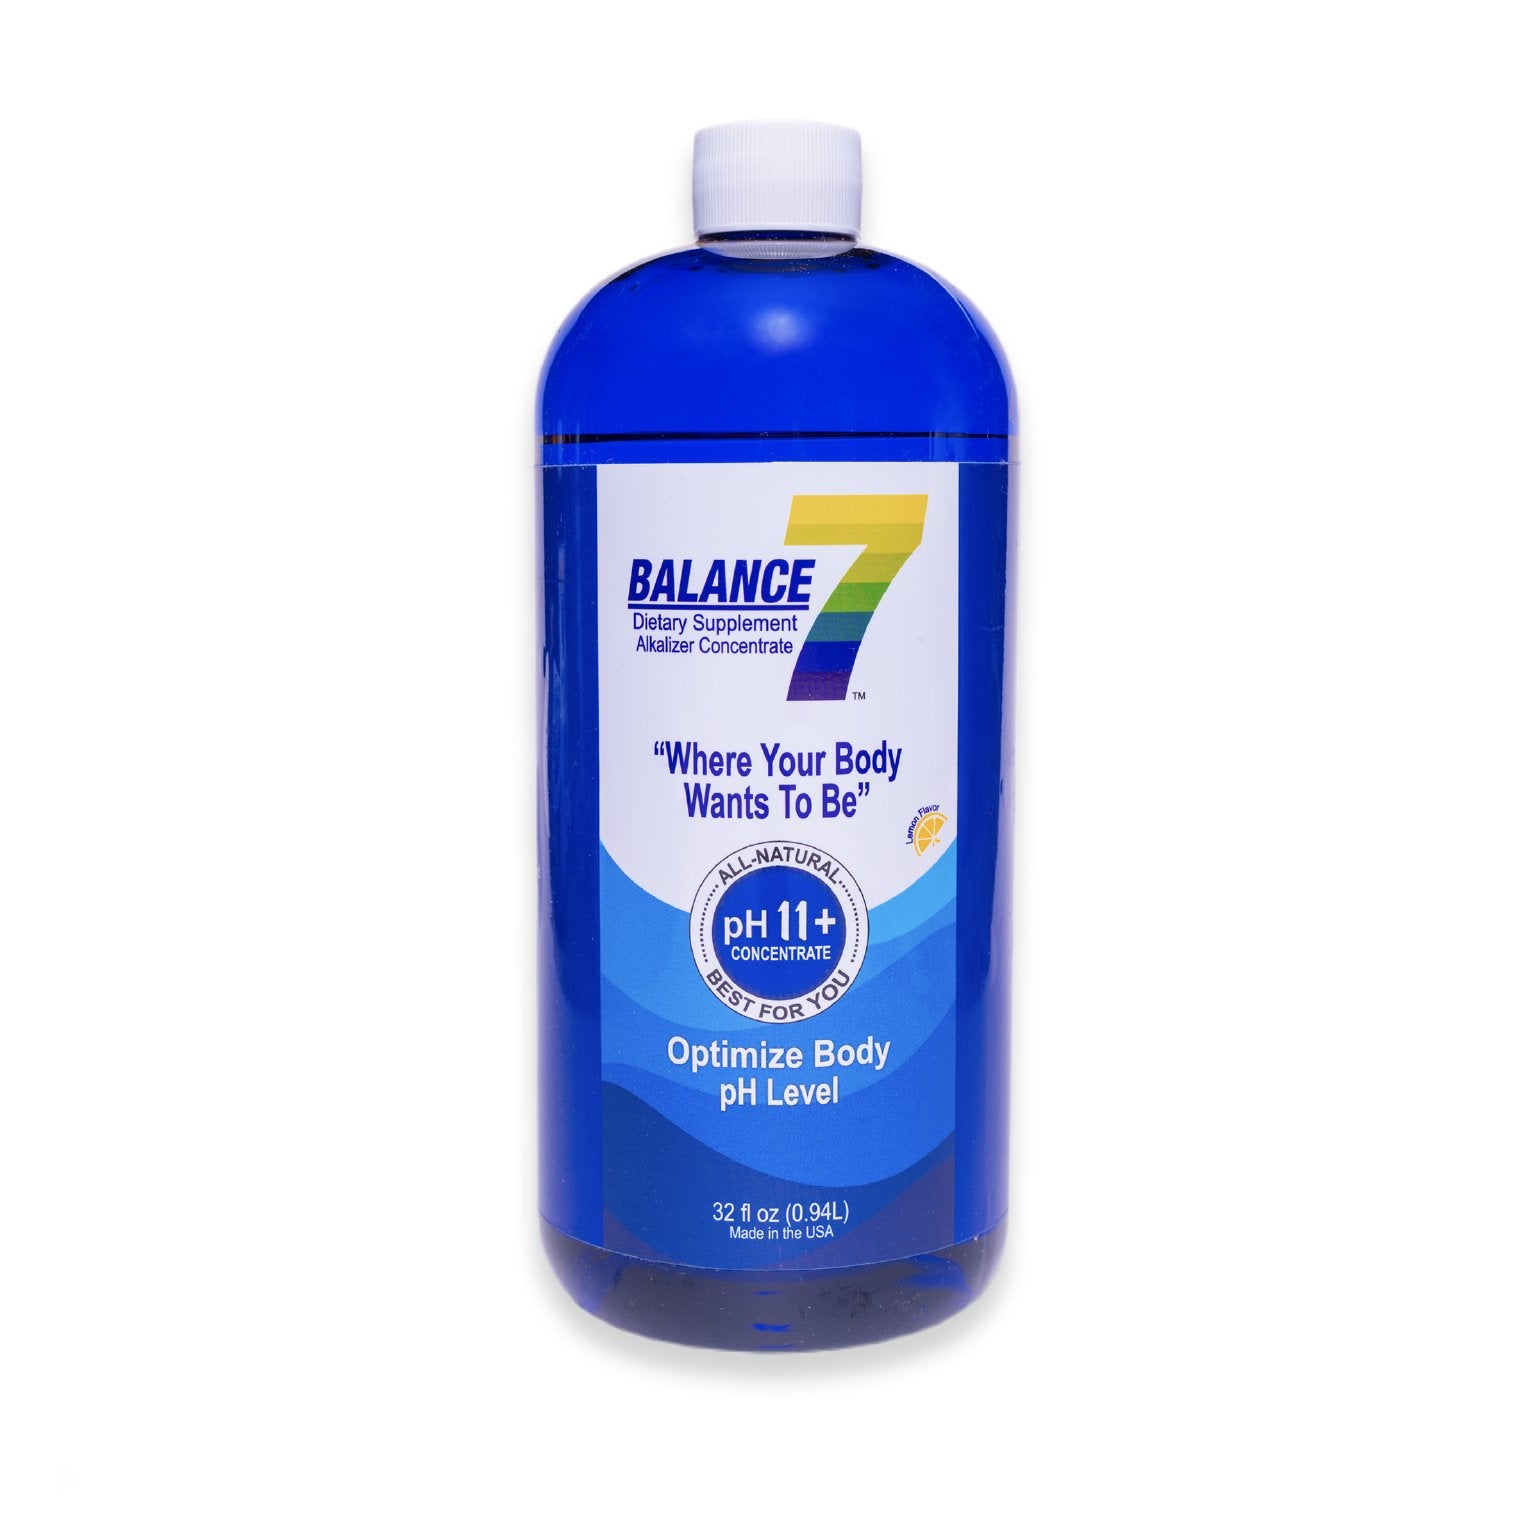 Alkaline Supplement product